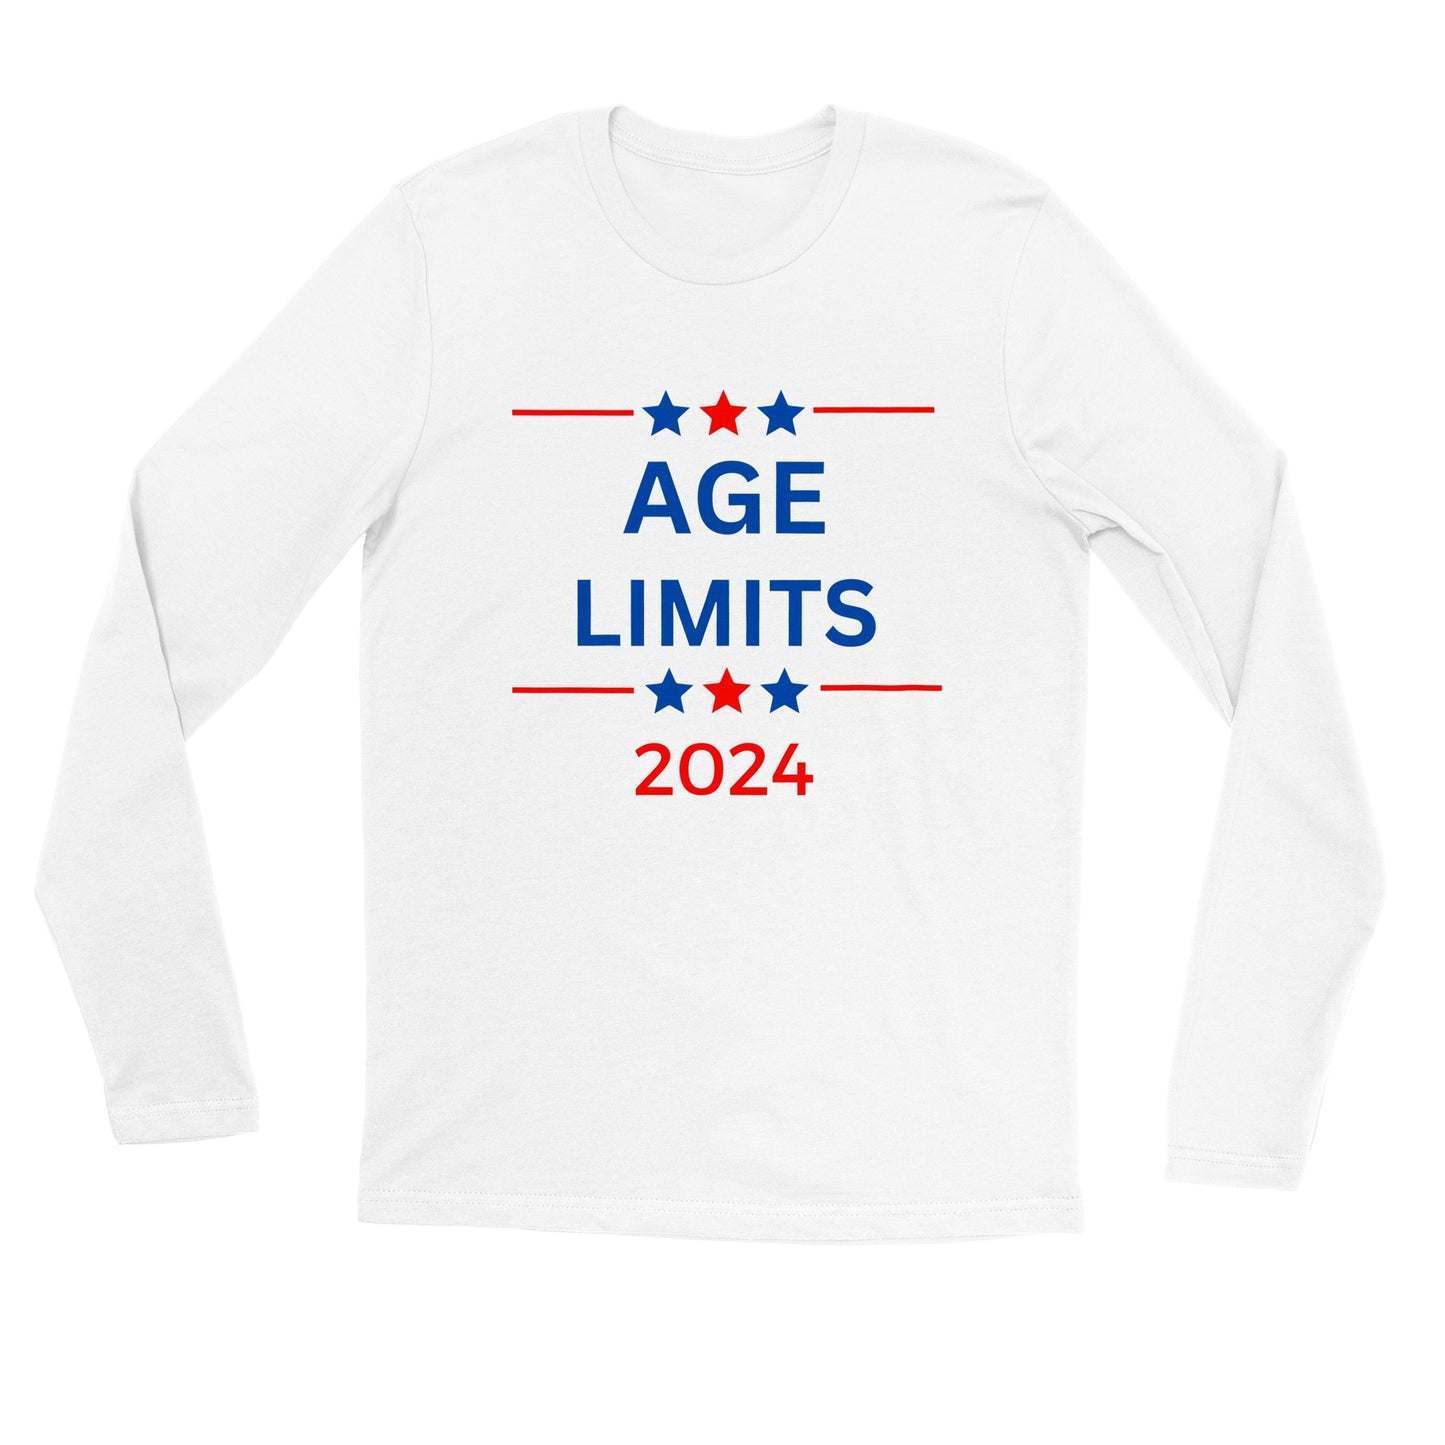 Long-sleeve T-shirt - Age Limits